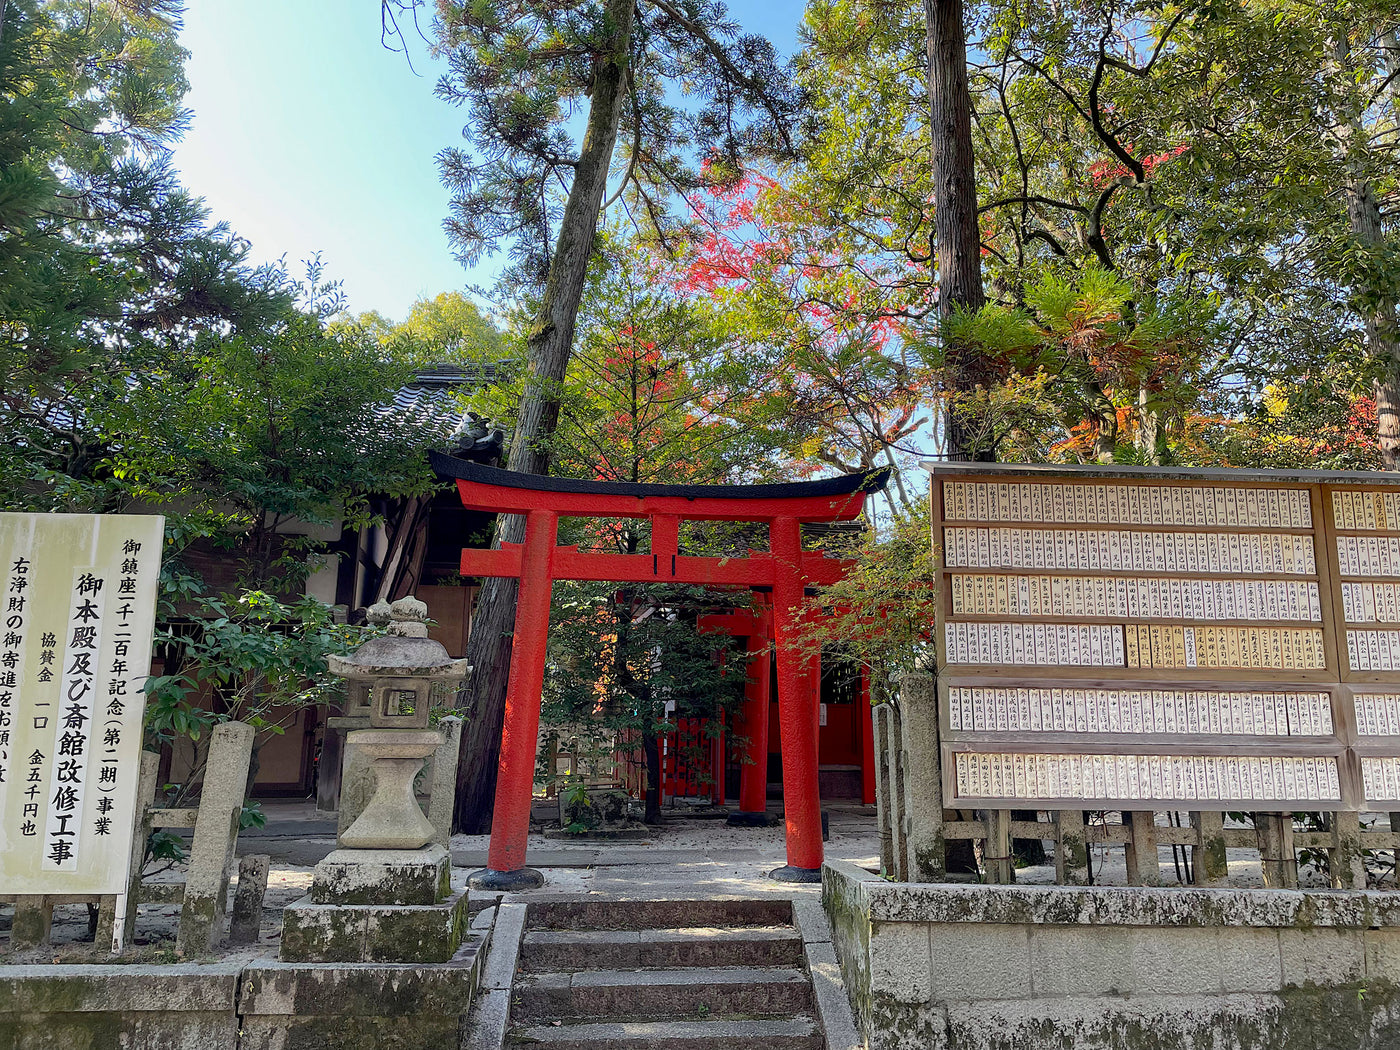 Torii gate in Kyoto, Japan